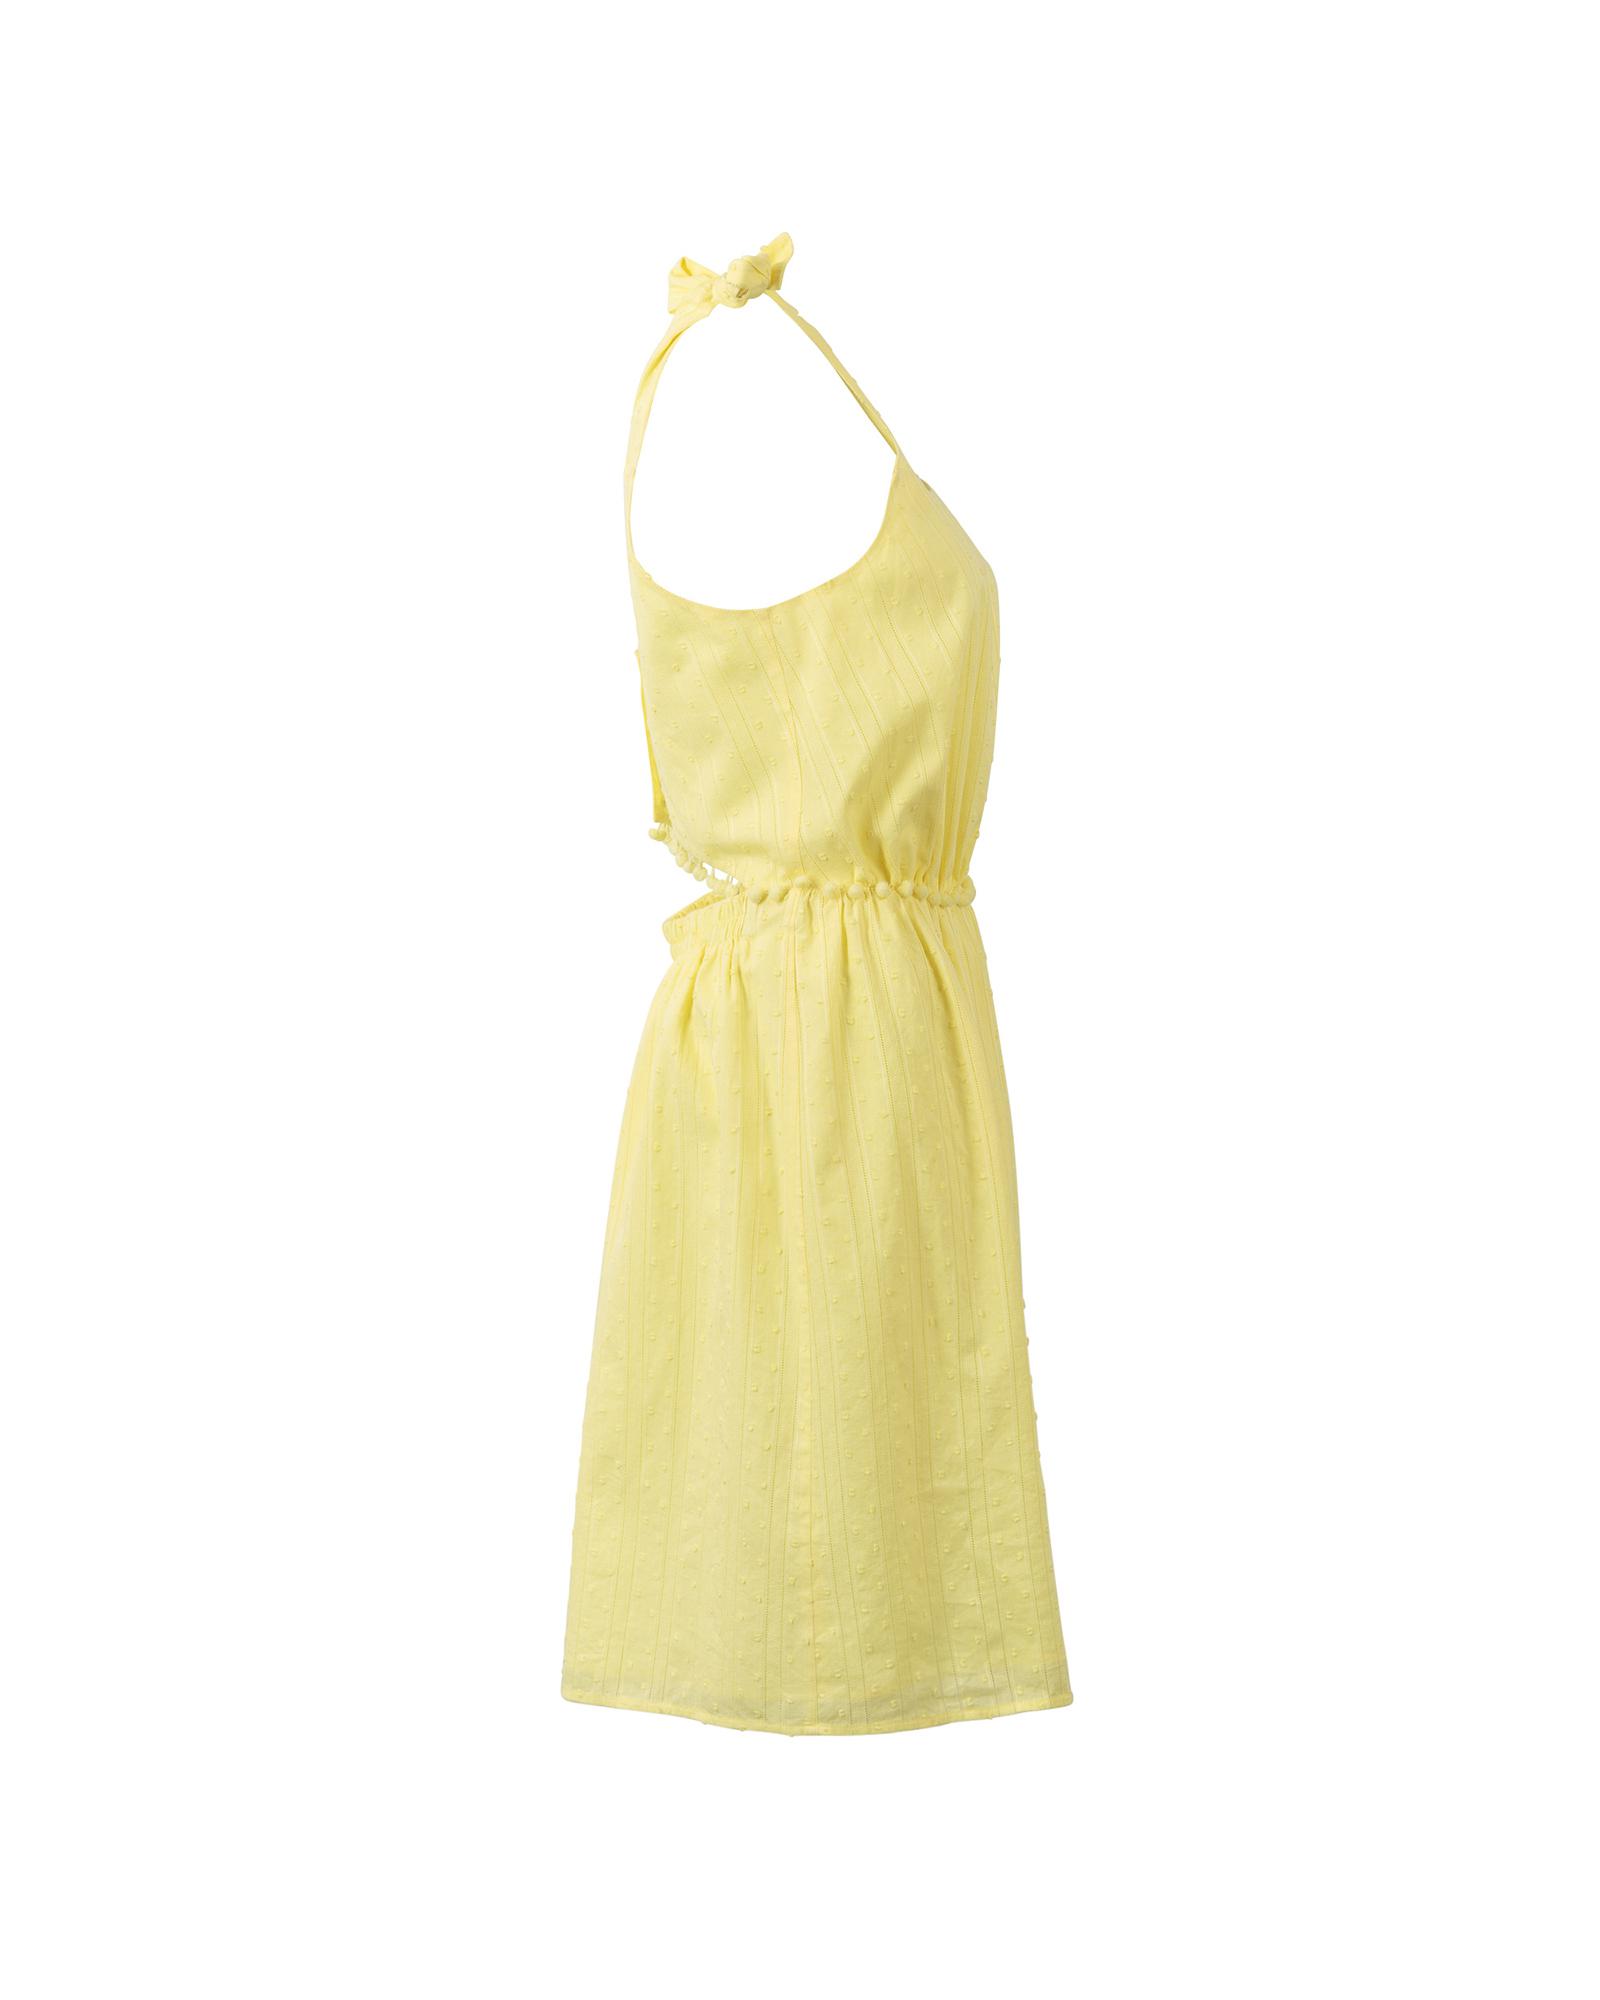 oliver bonas yellow dress